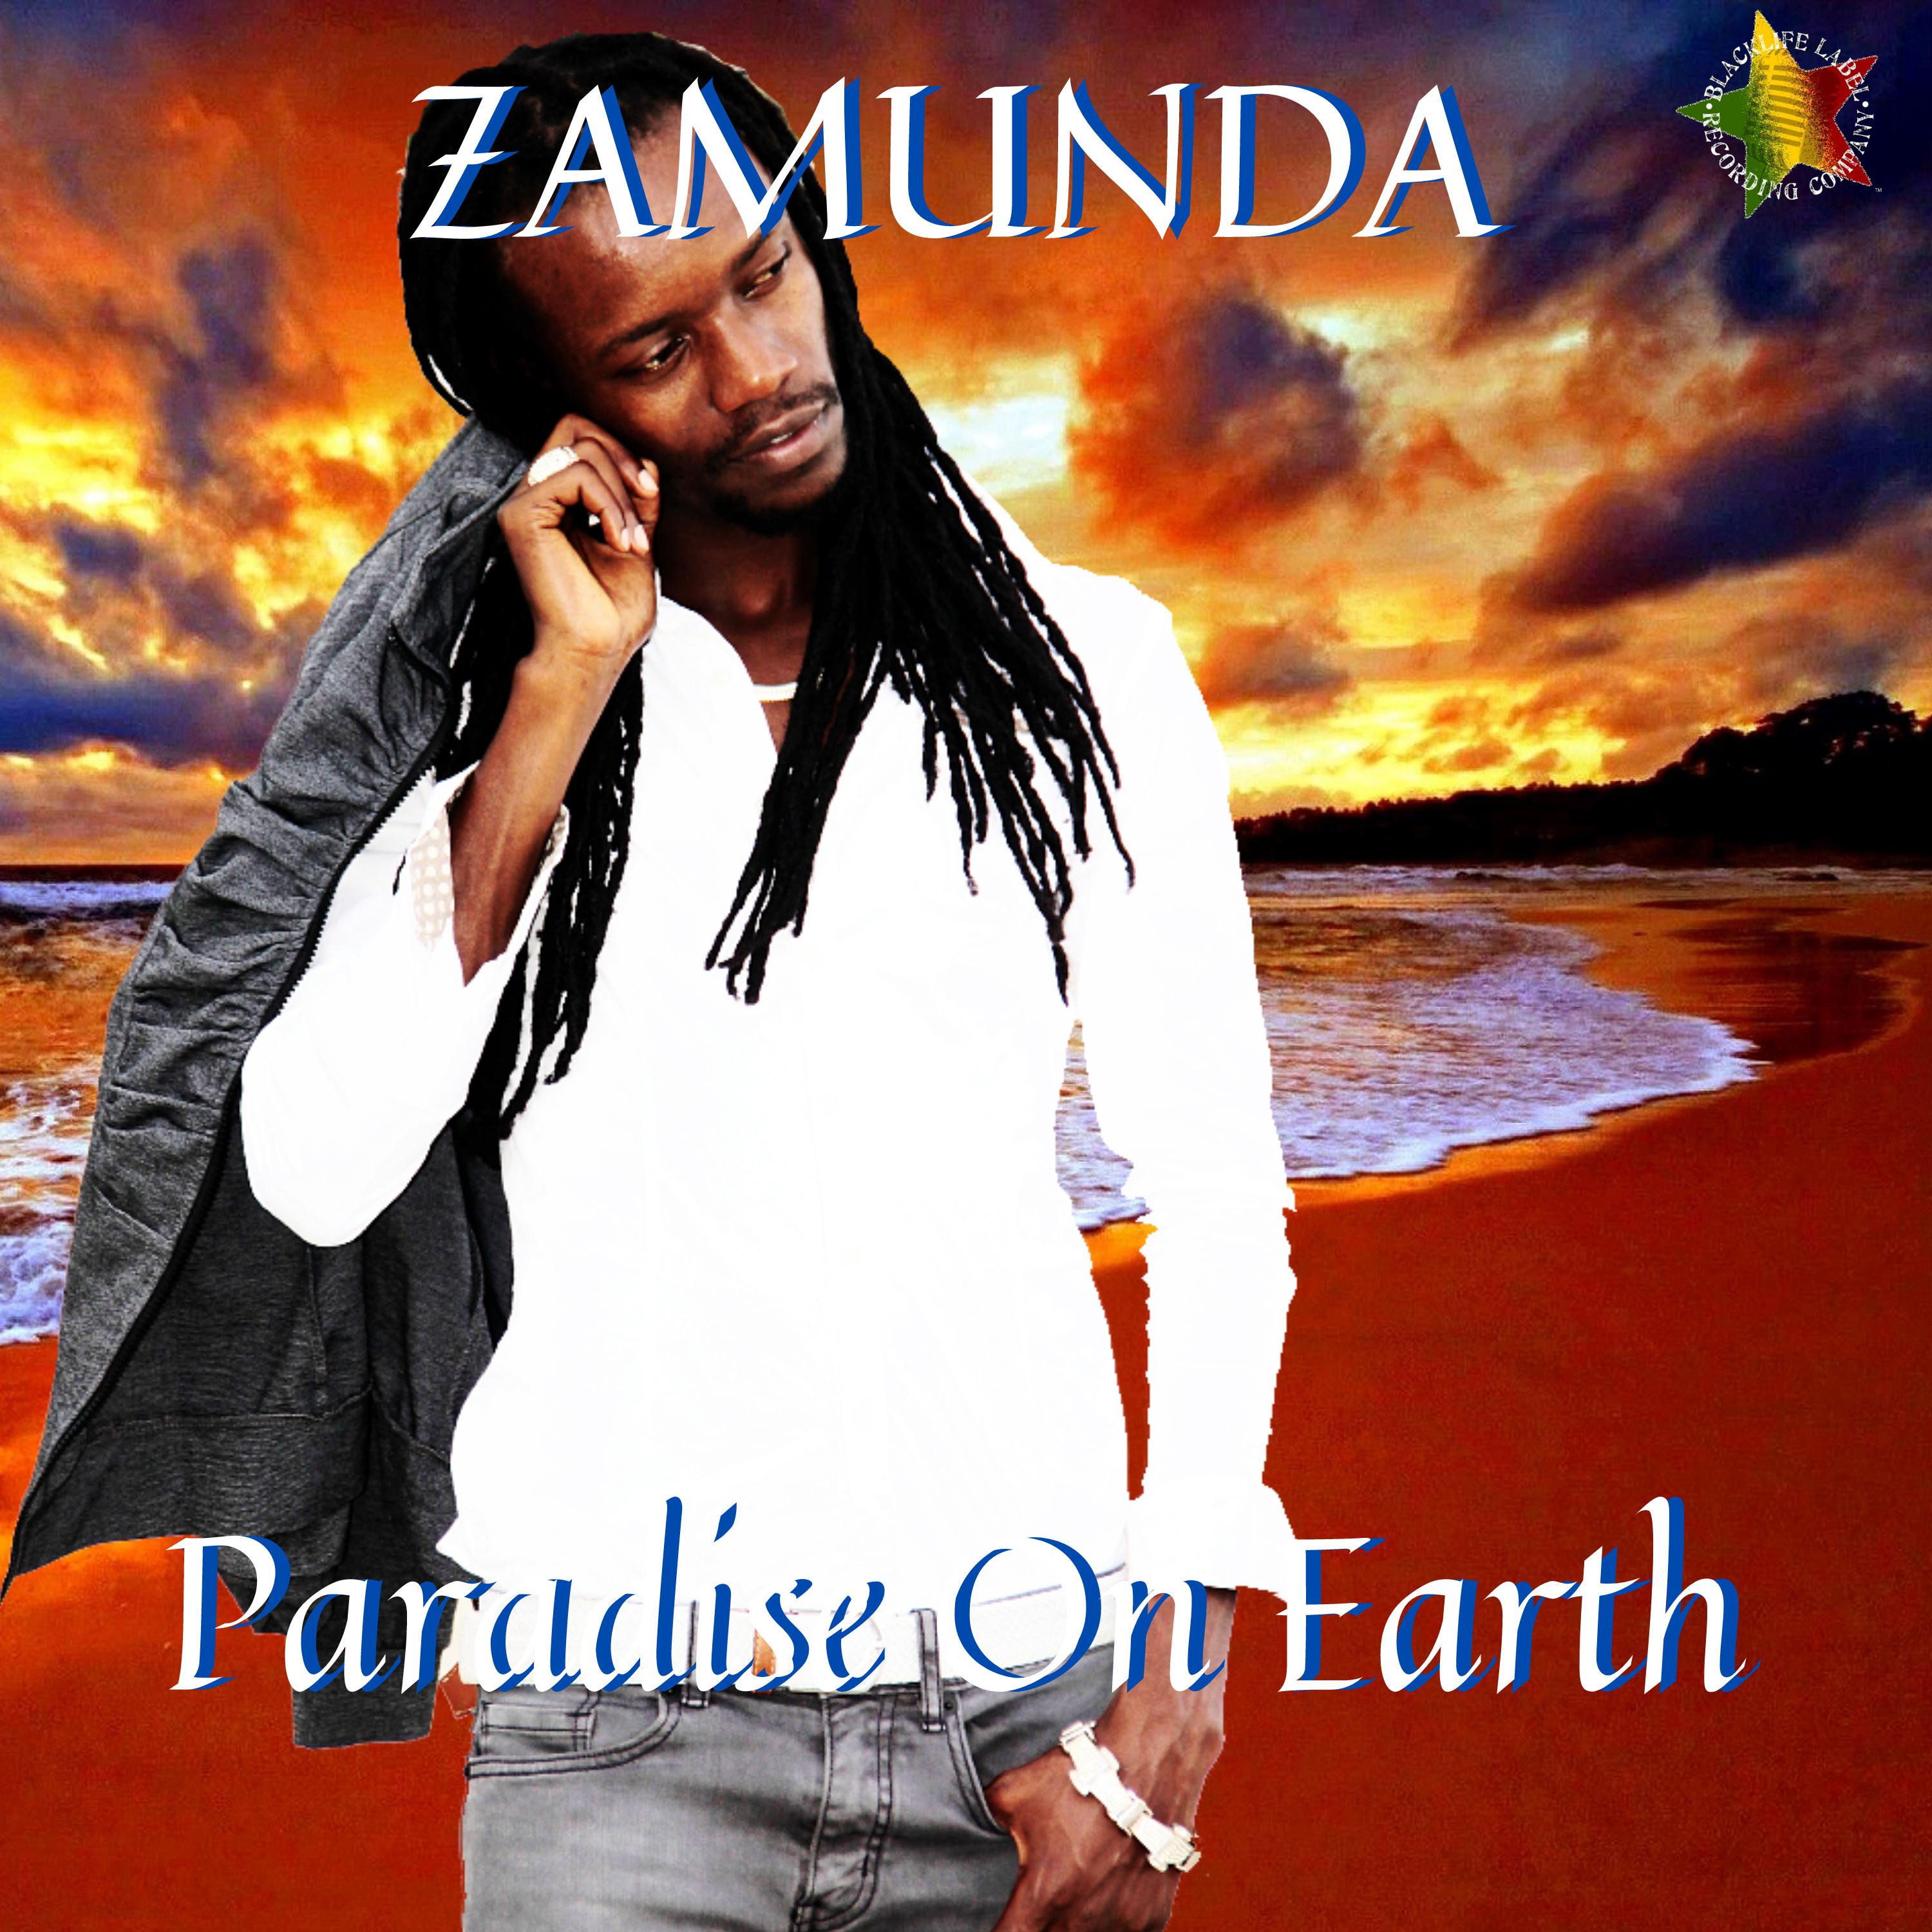 Zamunda - Party Like A Rockstar